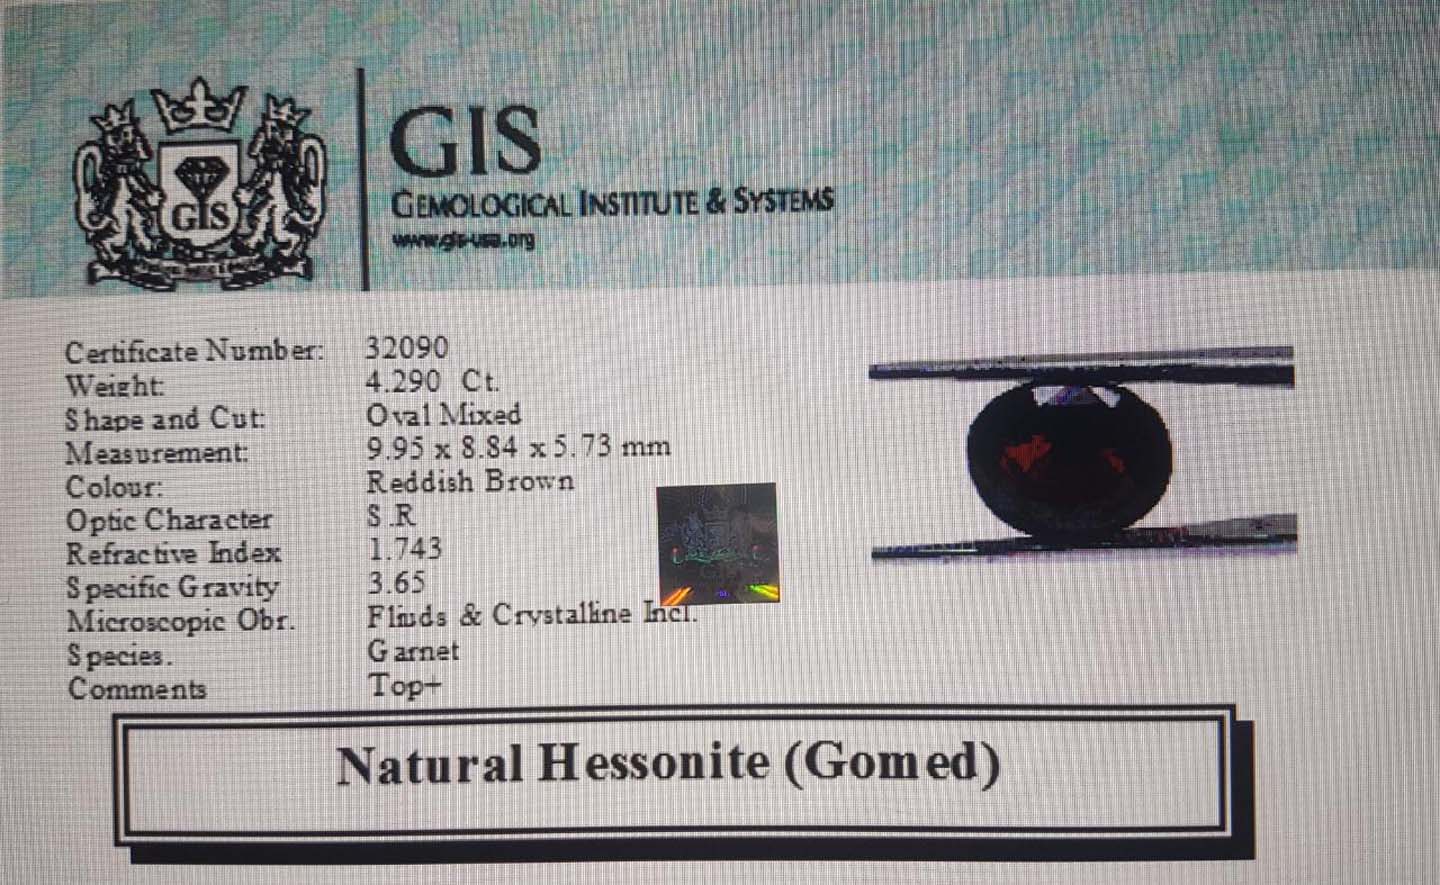 Hessonite (Gomed) 4.29 Ct.